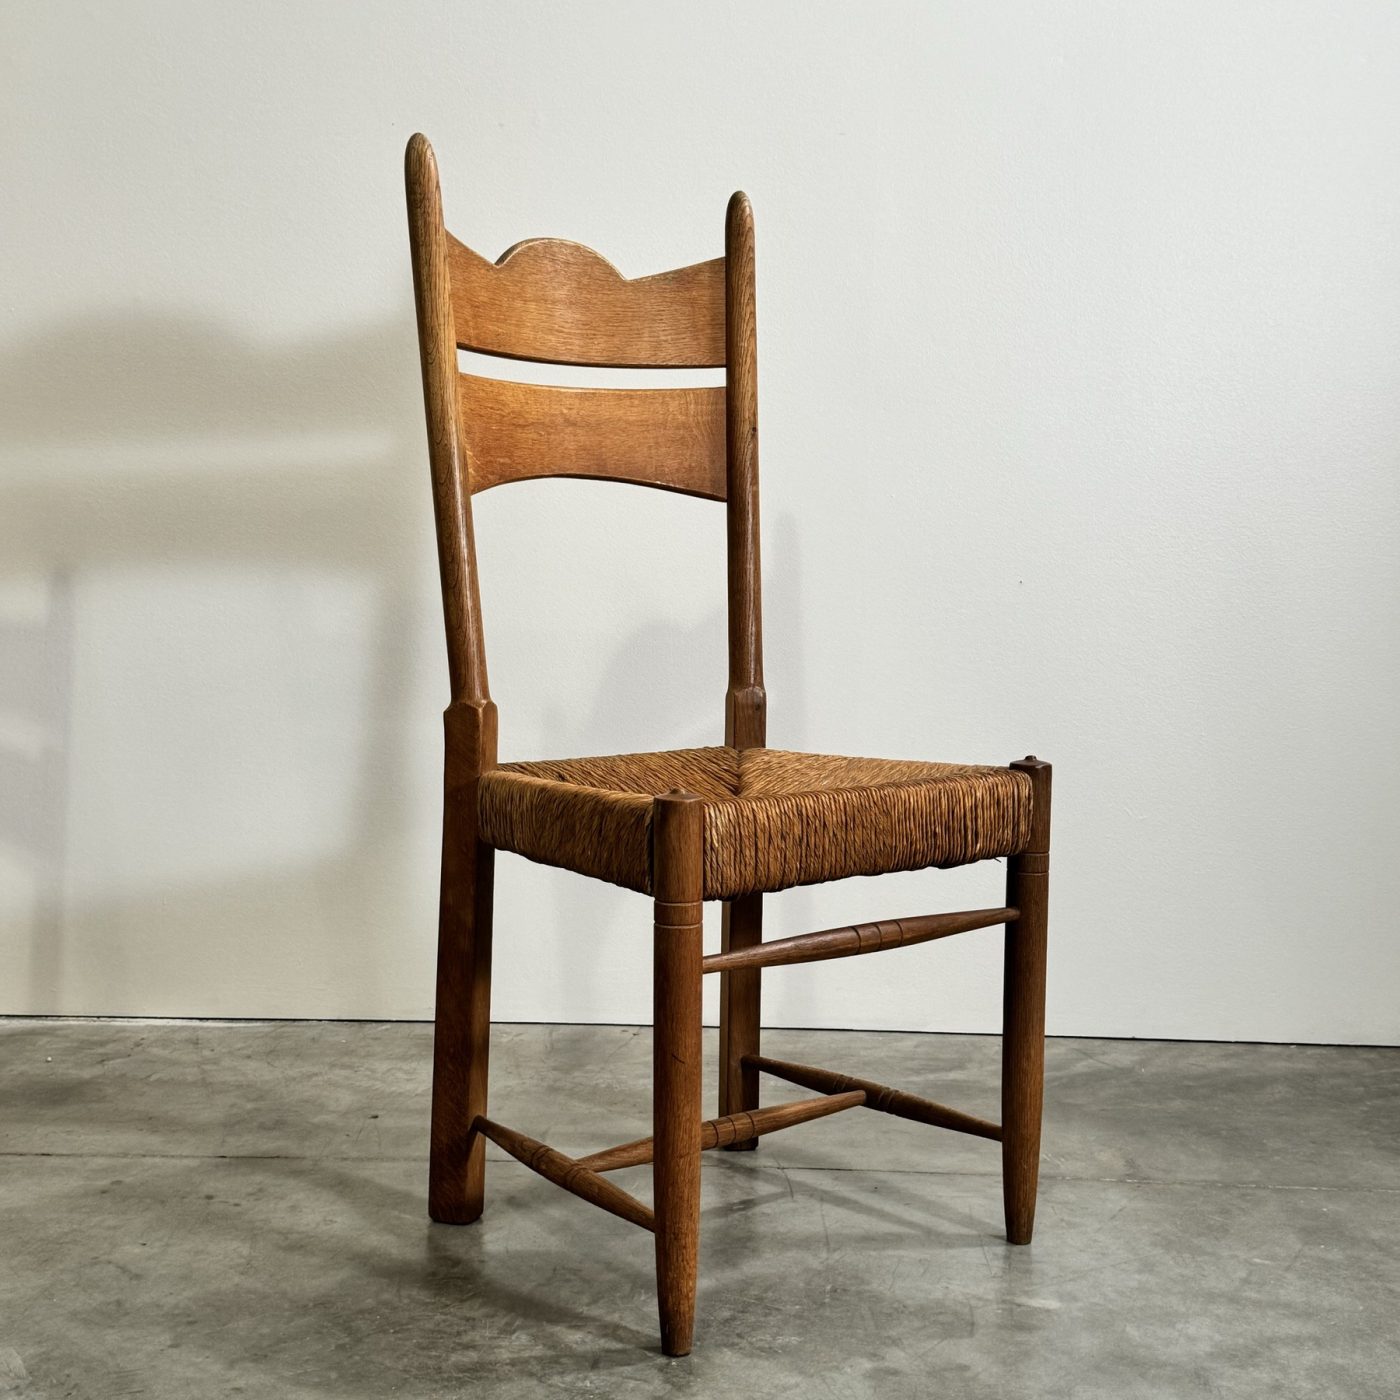 objet-vagabond-rustic-chairs0012